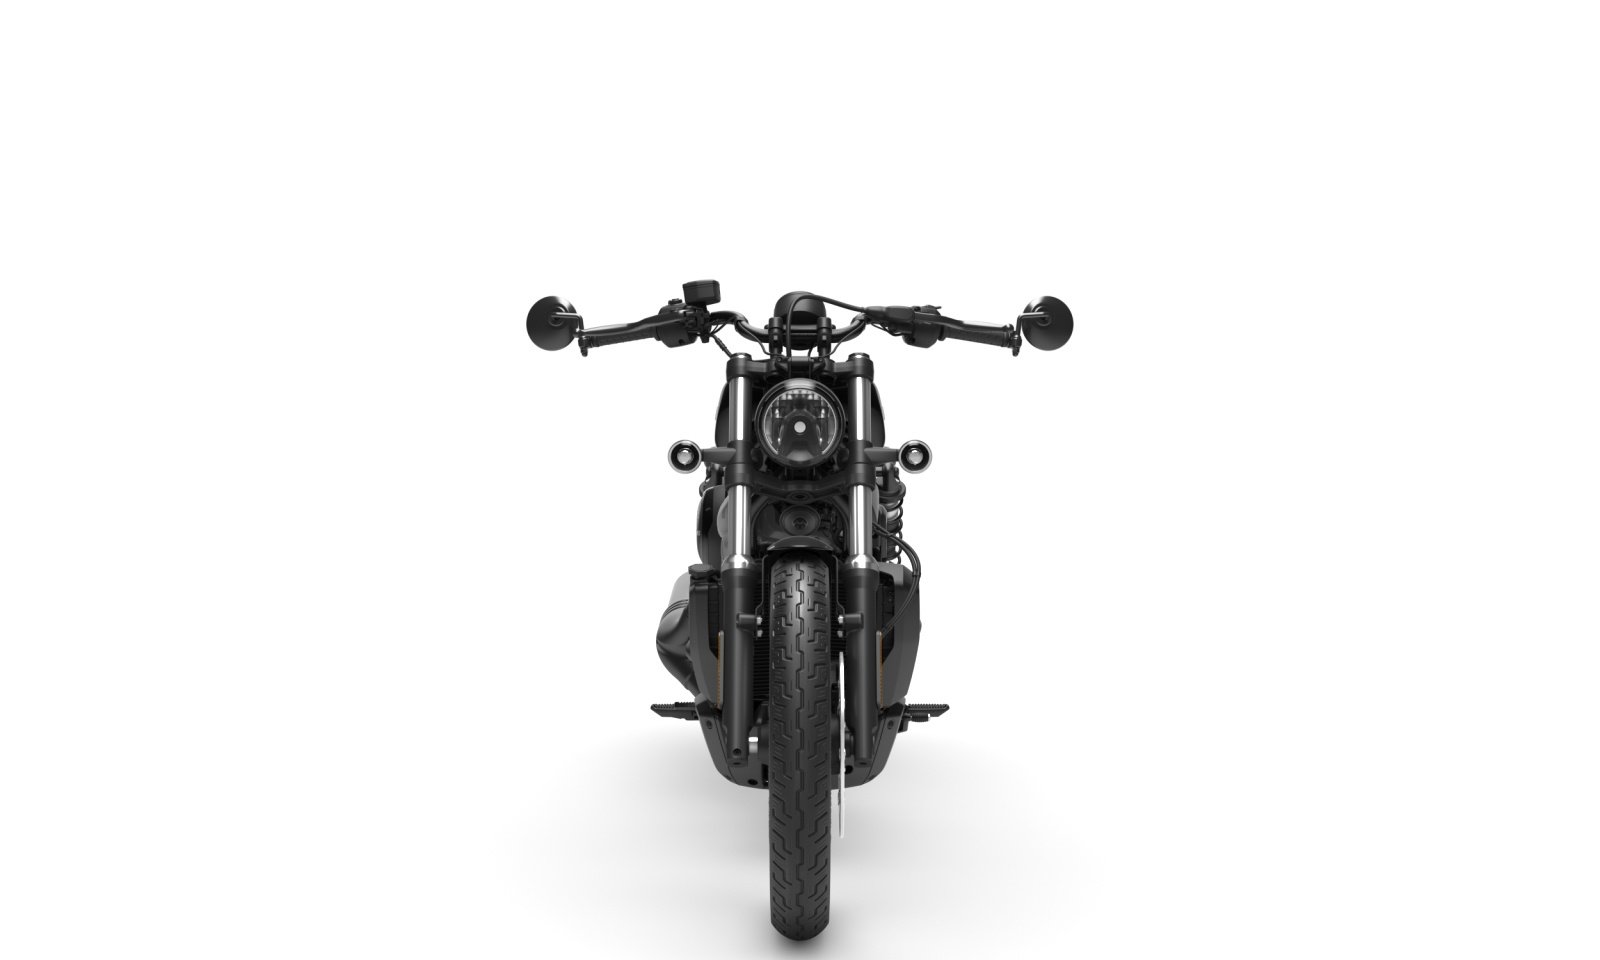 Nightster Intake  Harley-Davidson Parts & Accessories 